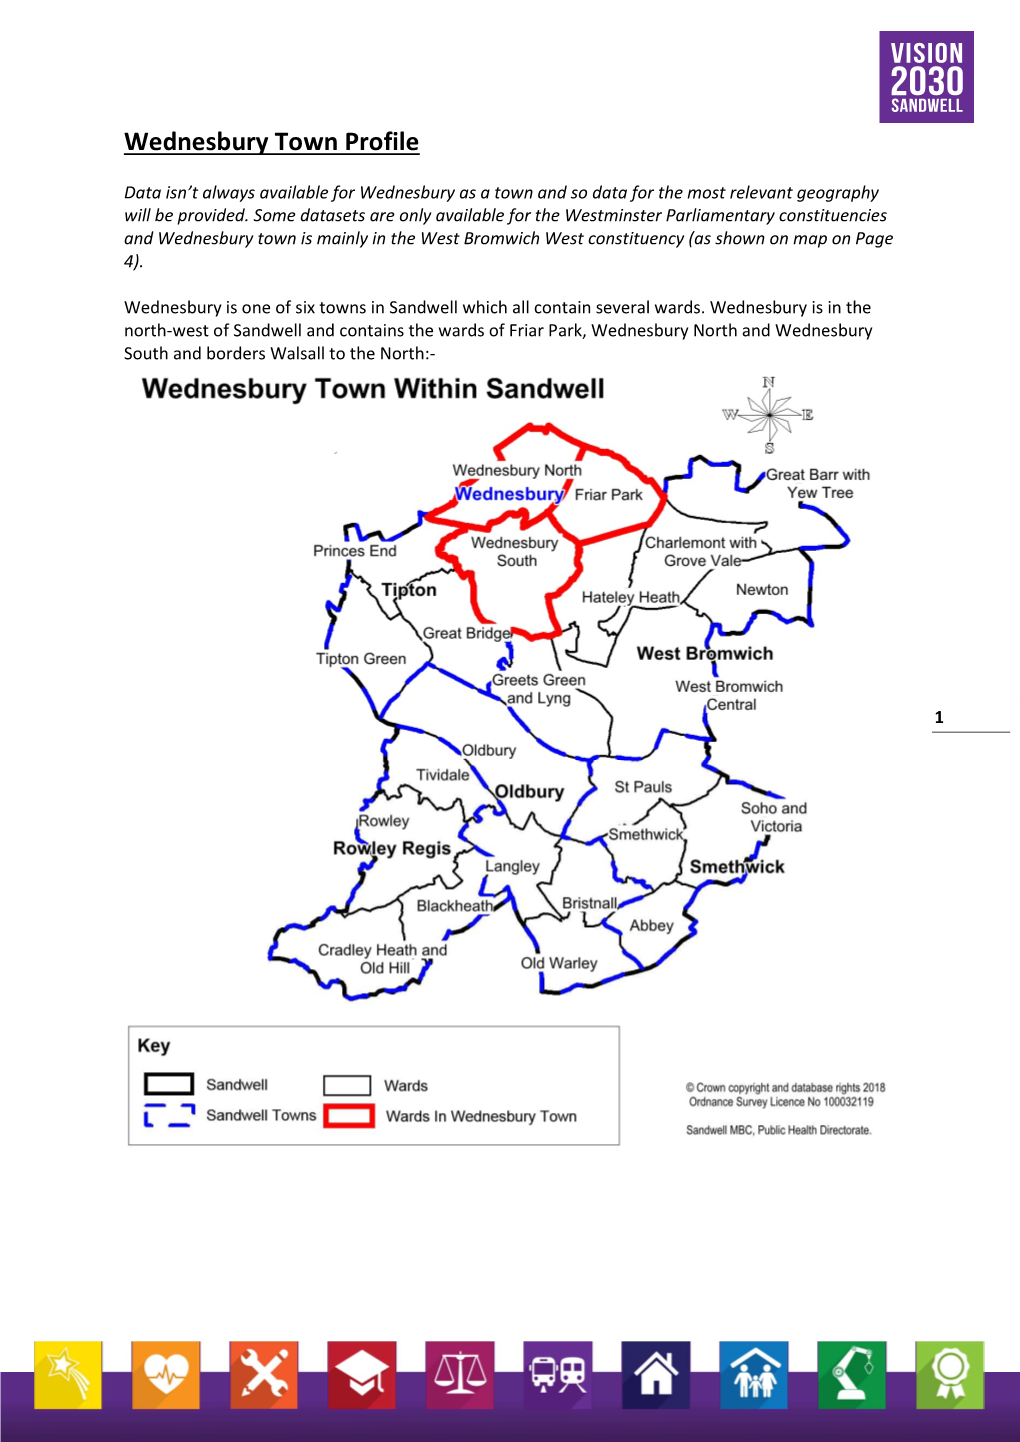 Wednesbury Town Profile